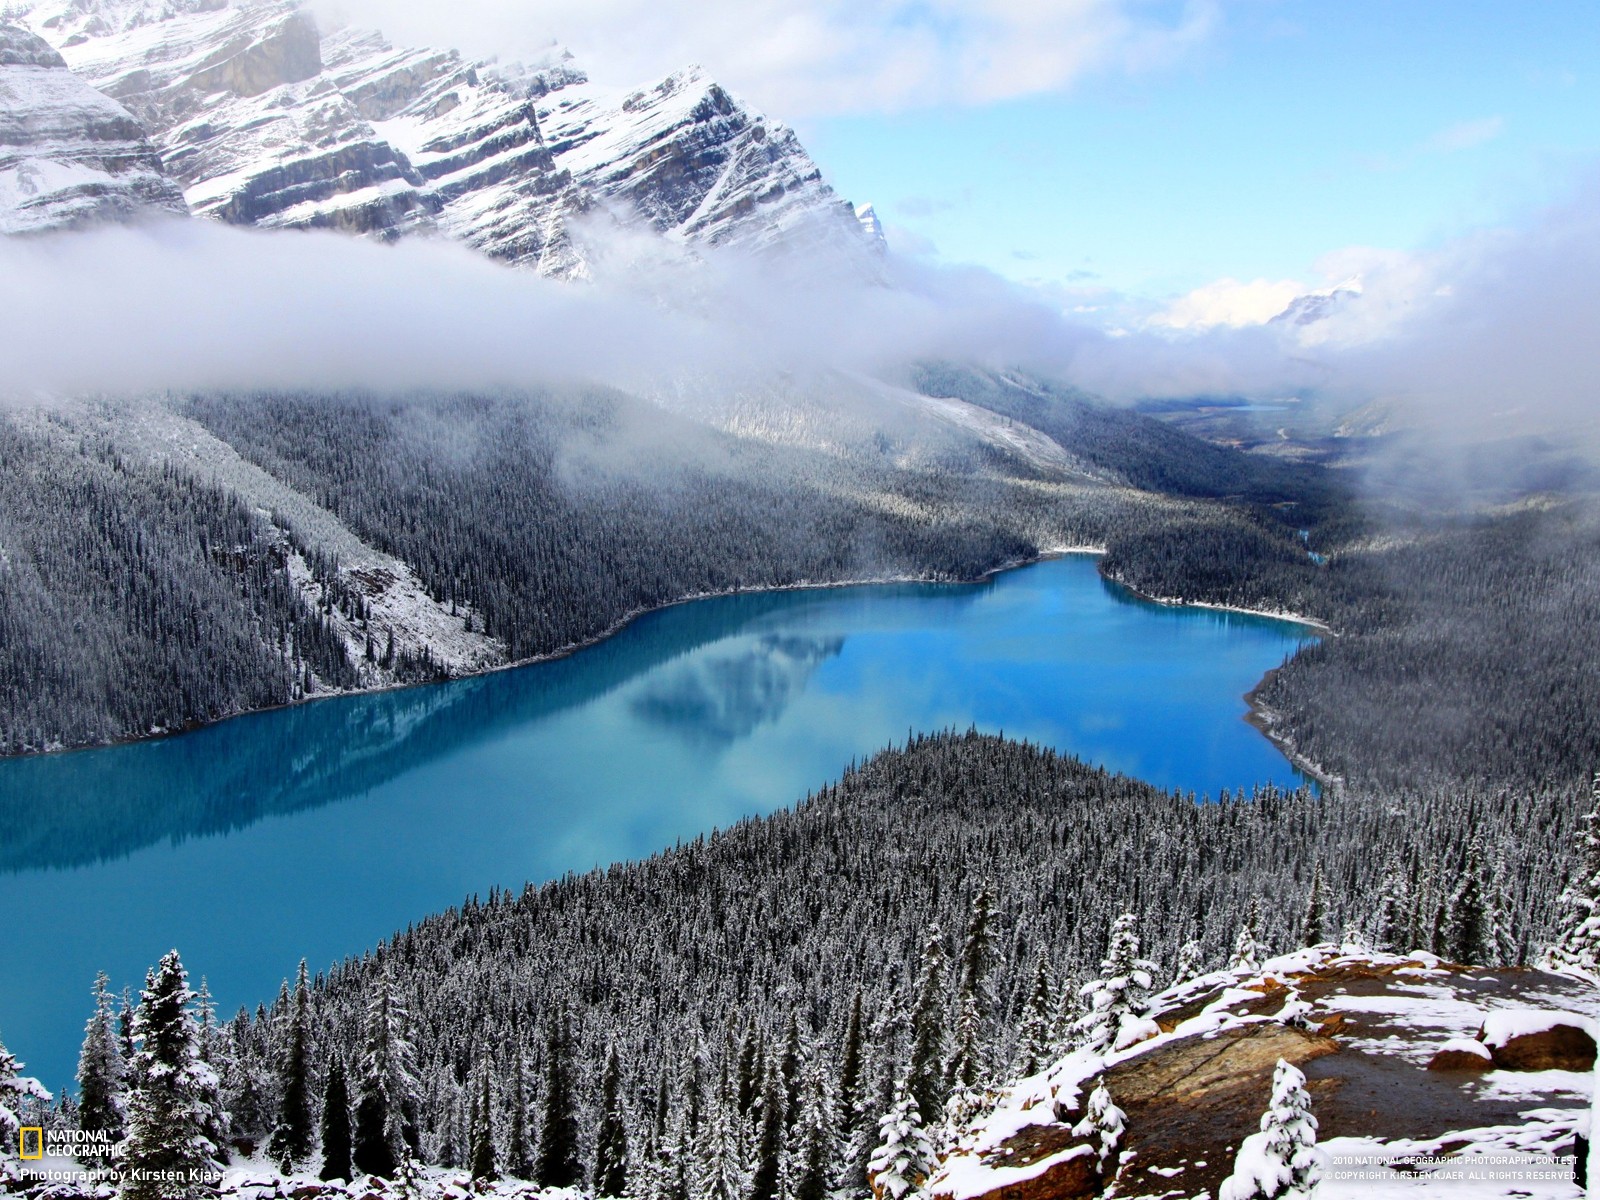 General 1600x1200 nature winter Peyto Lake Canada Rocky Mountains nordic landscapes mountains lake